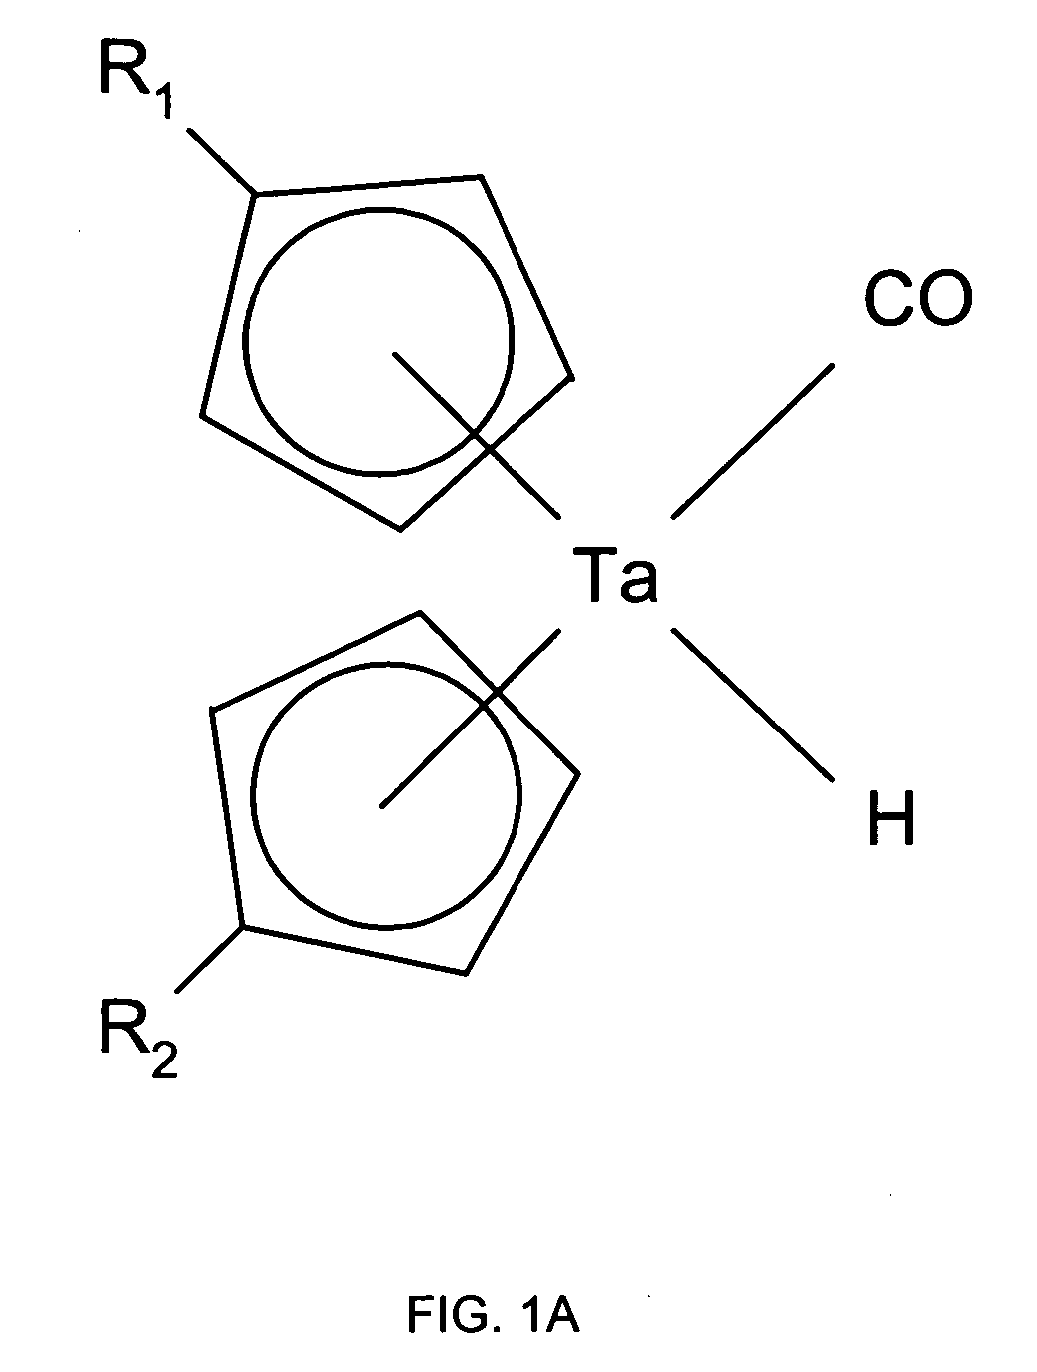 Method of forming a tantalum-containing layer from a metalorganic precursor